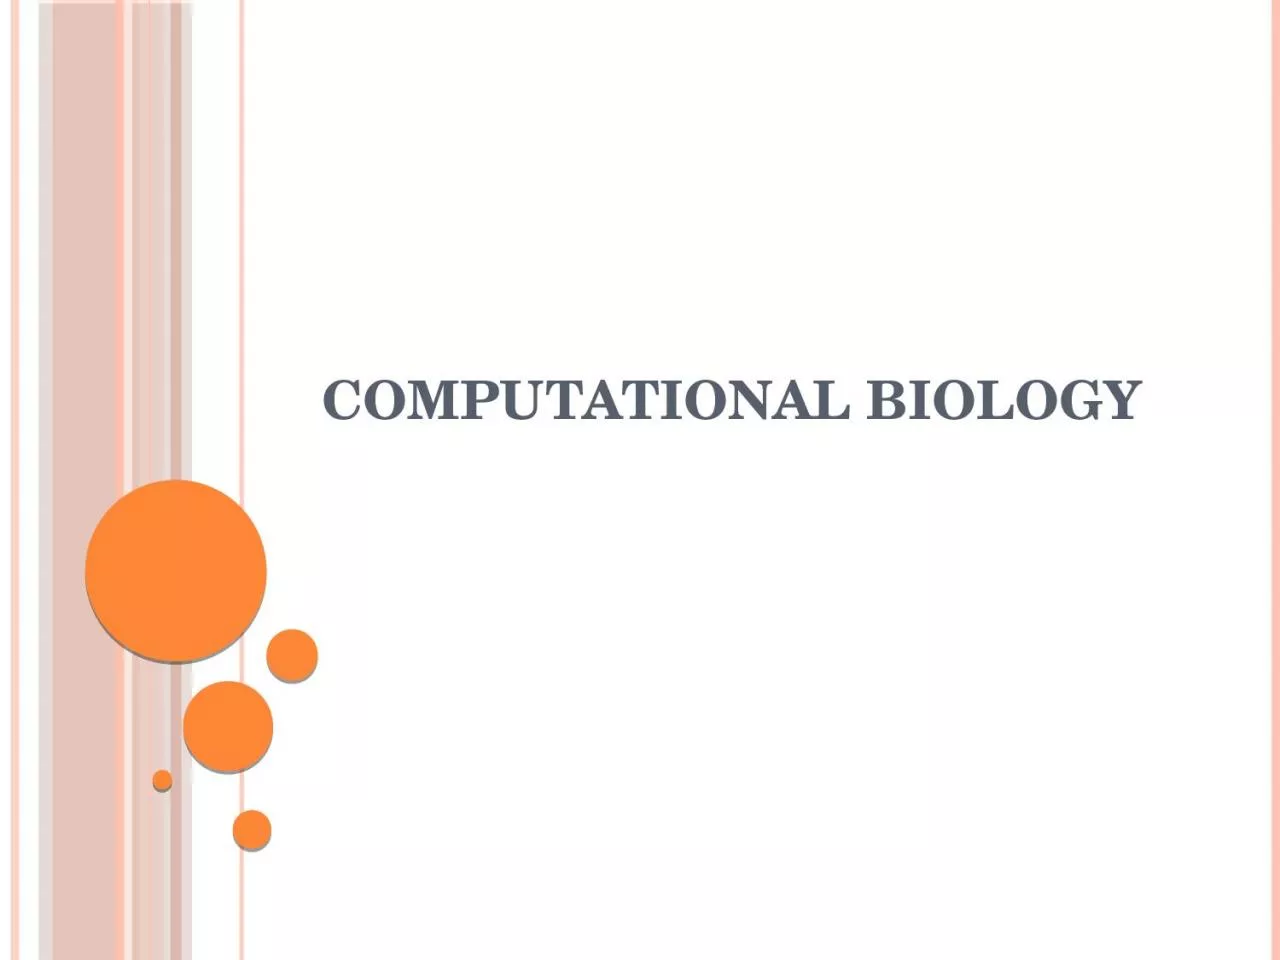 Computational biology Outline